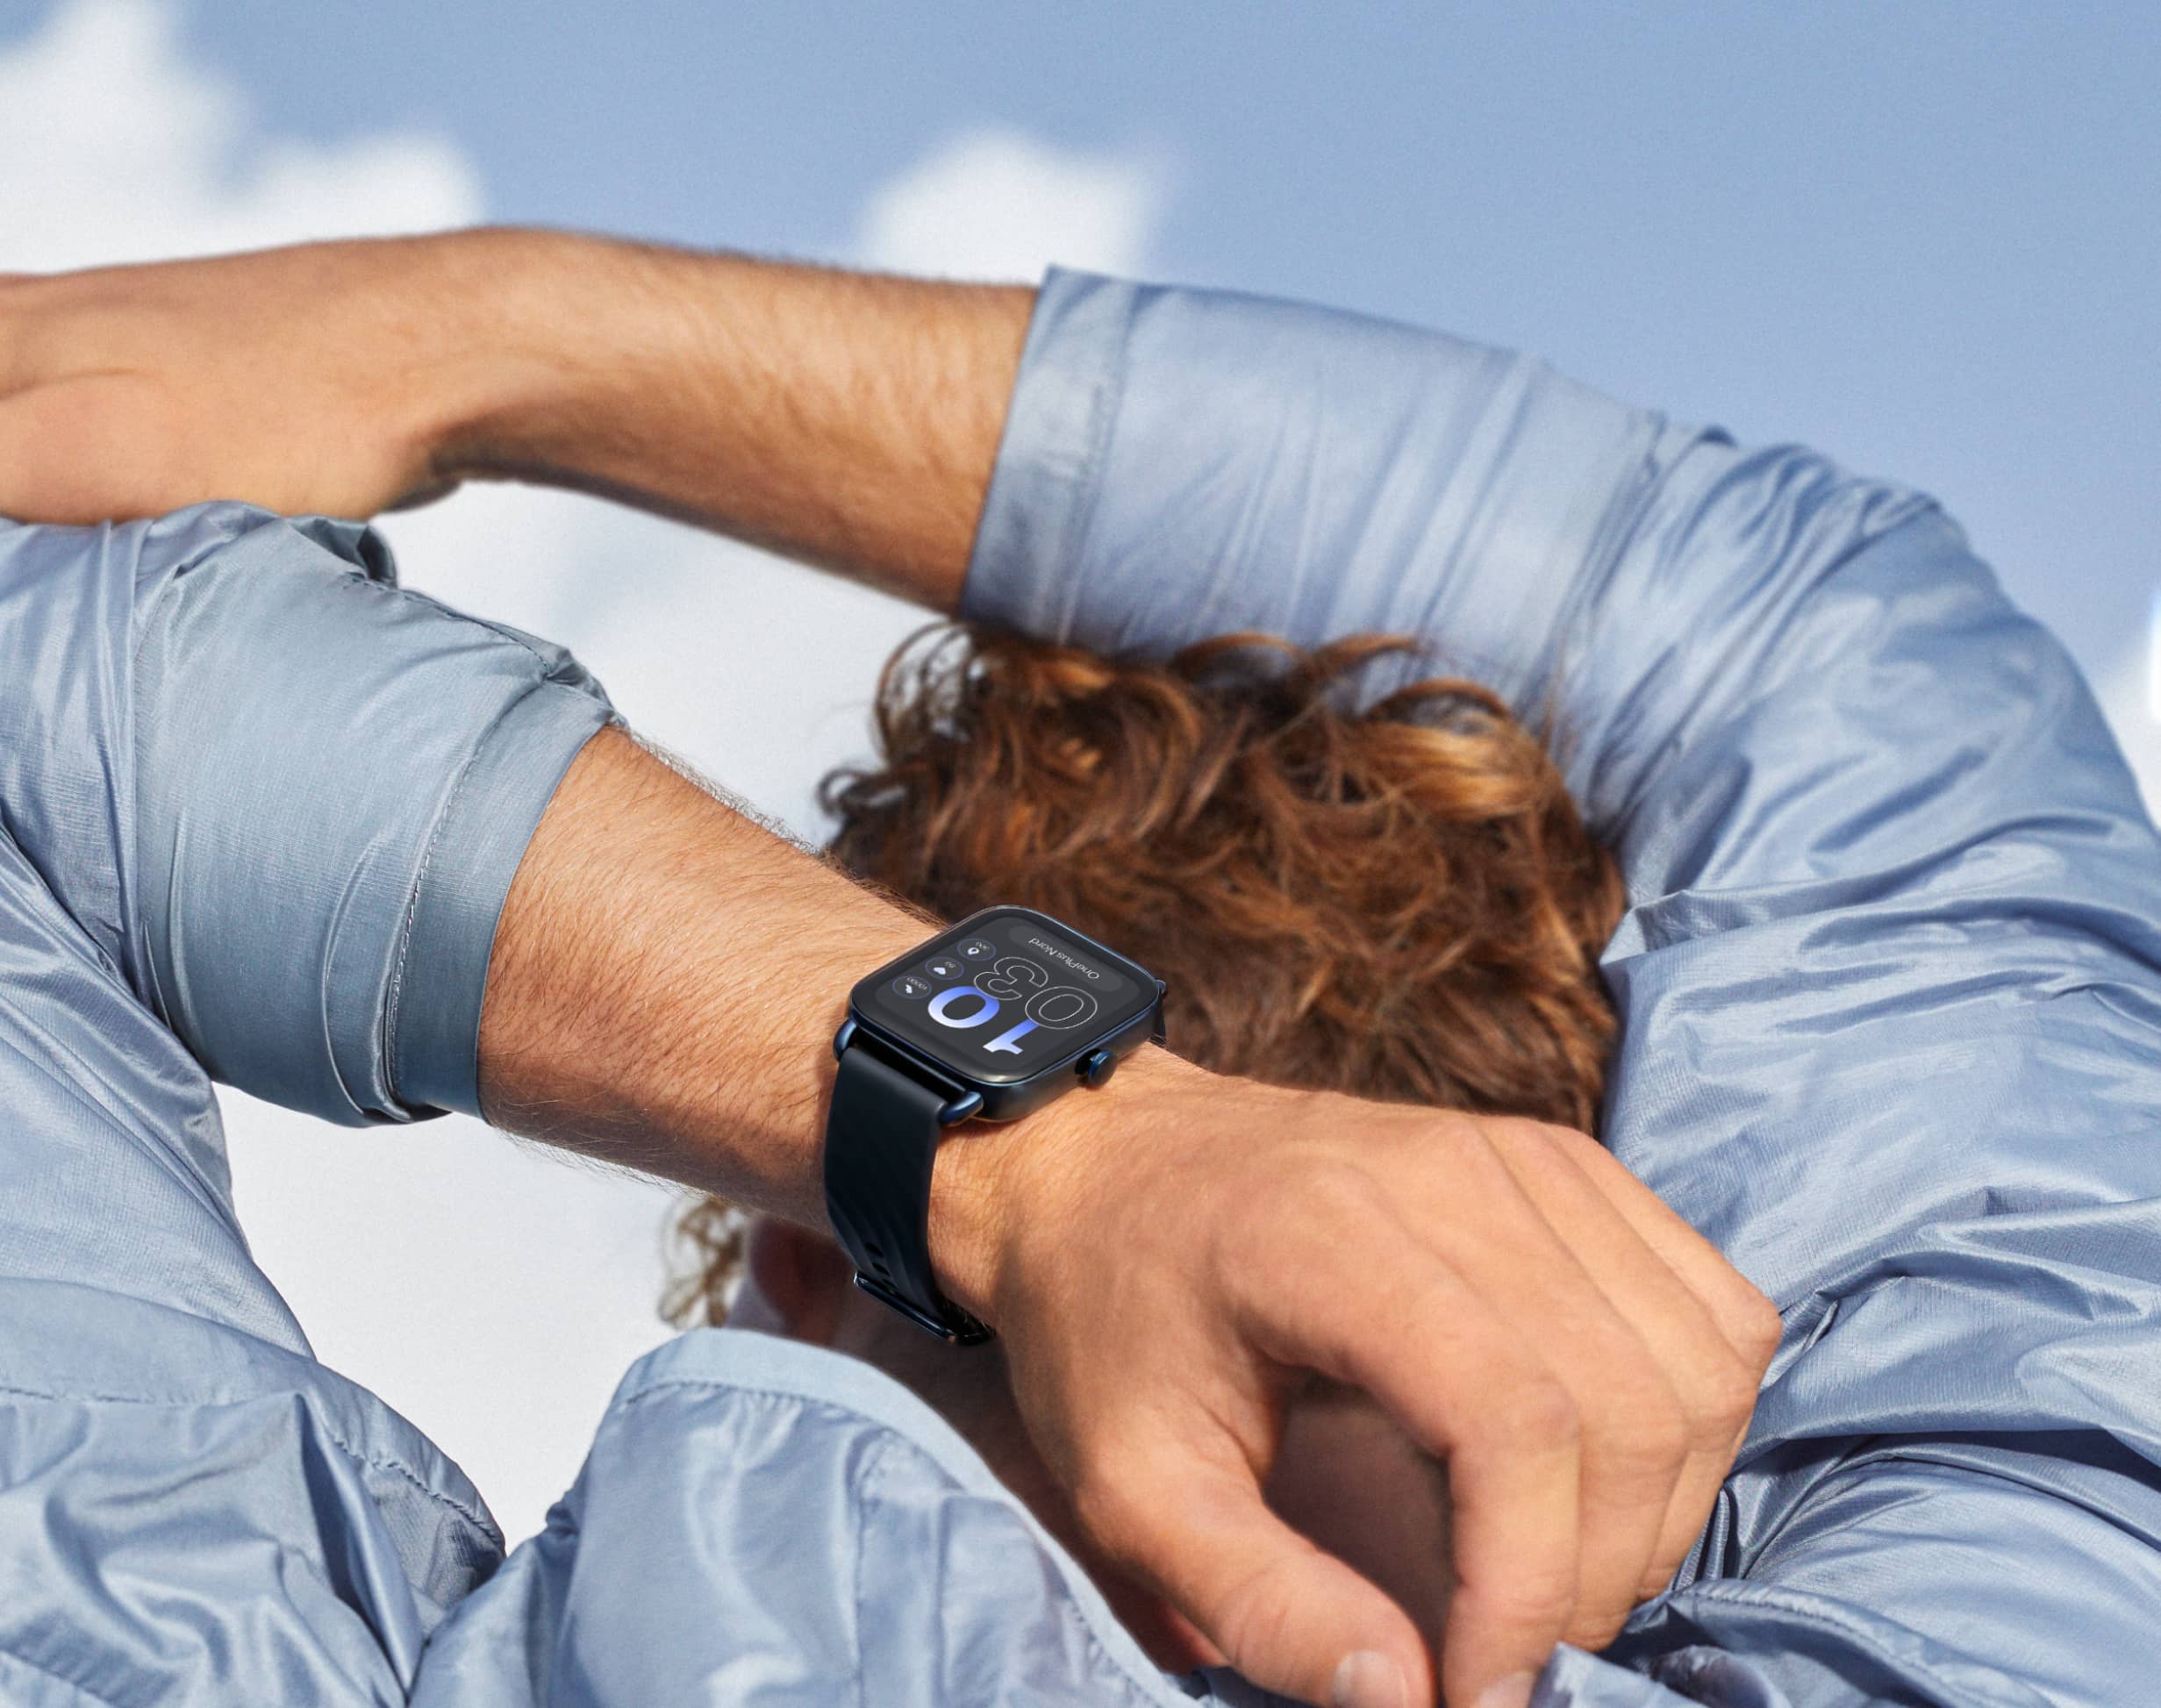 OnePlus Nord Watch smartwatch